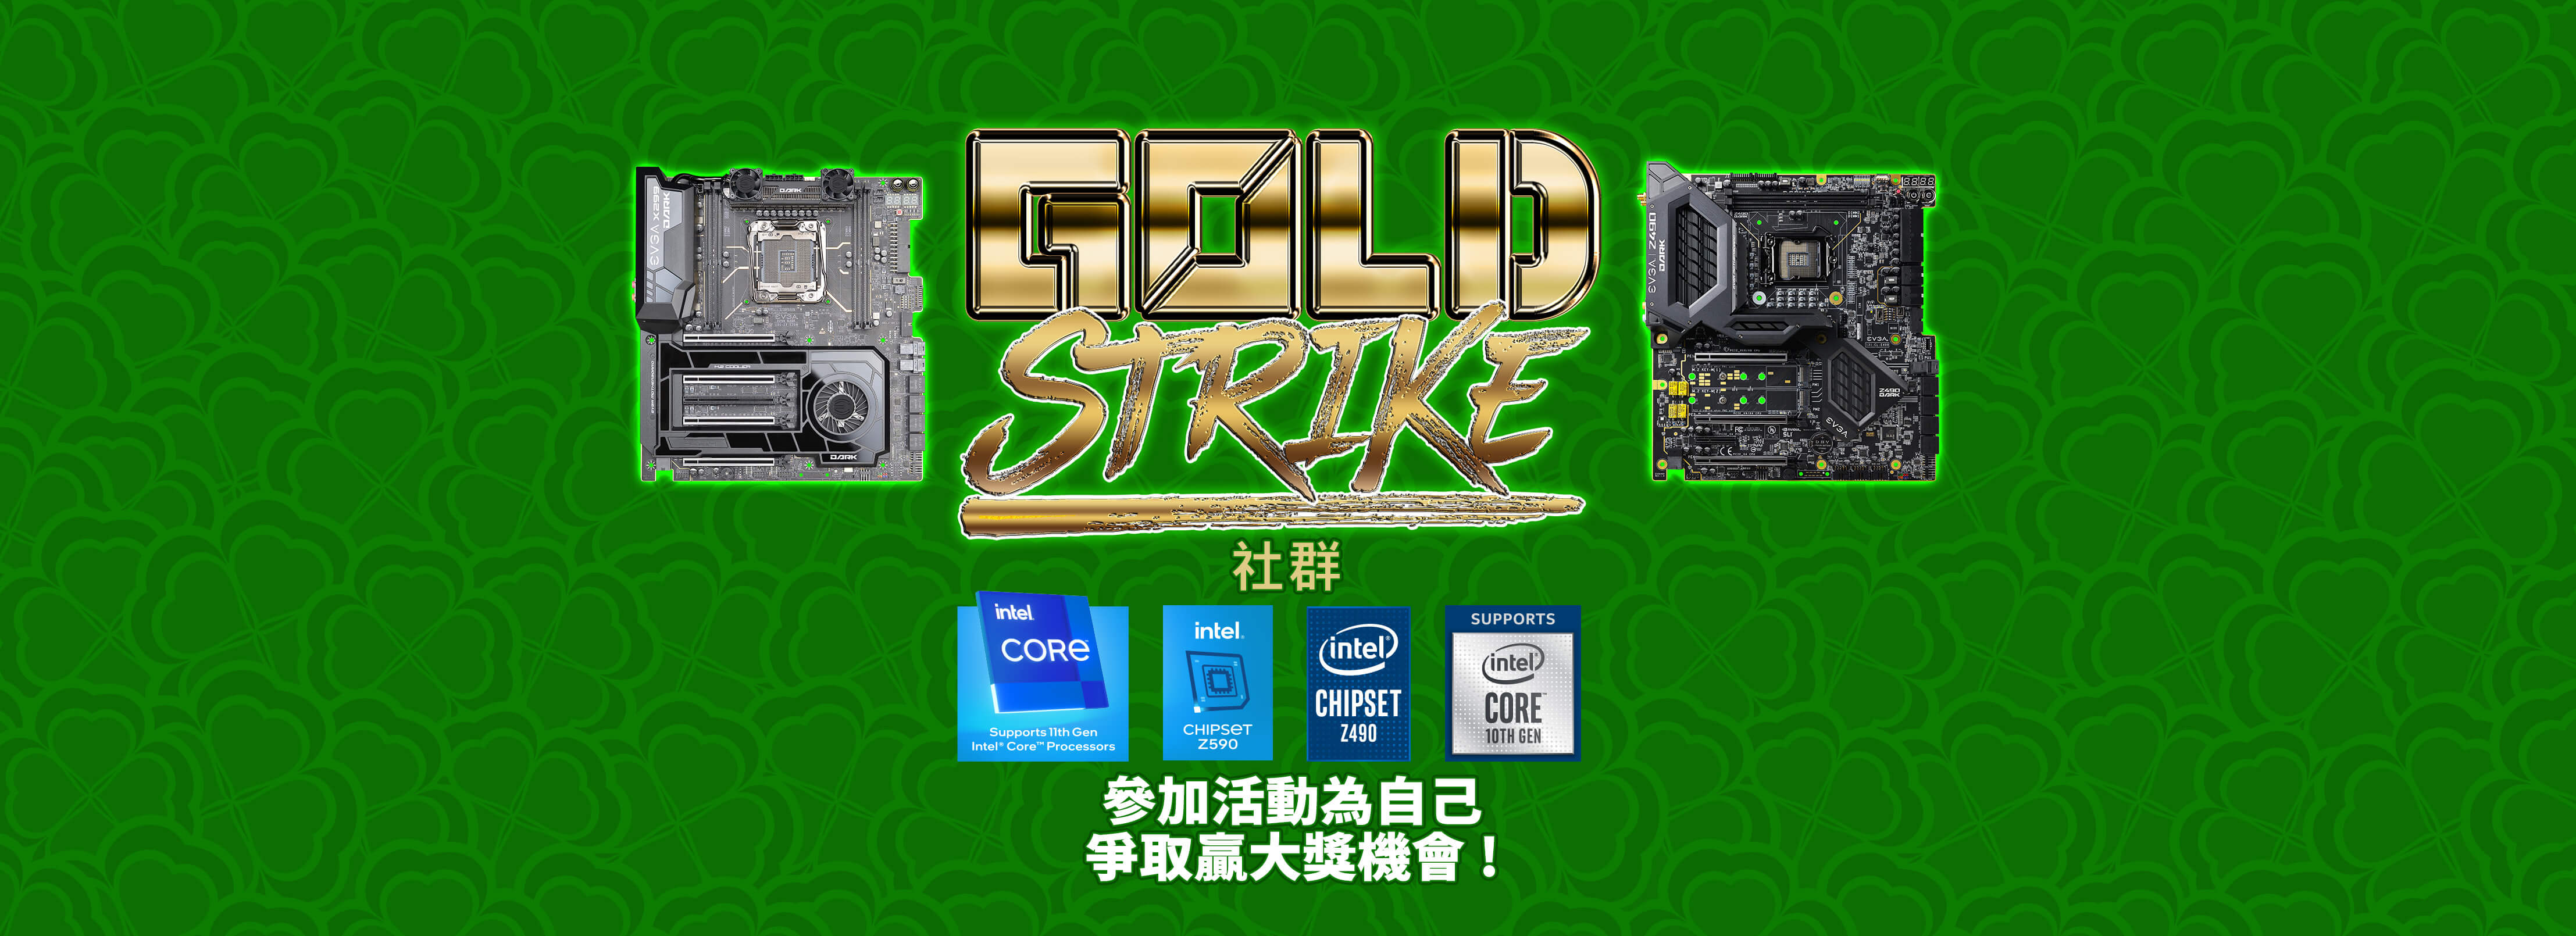 Gold Strike Social Media Event